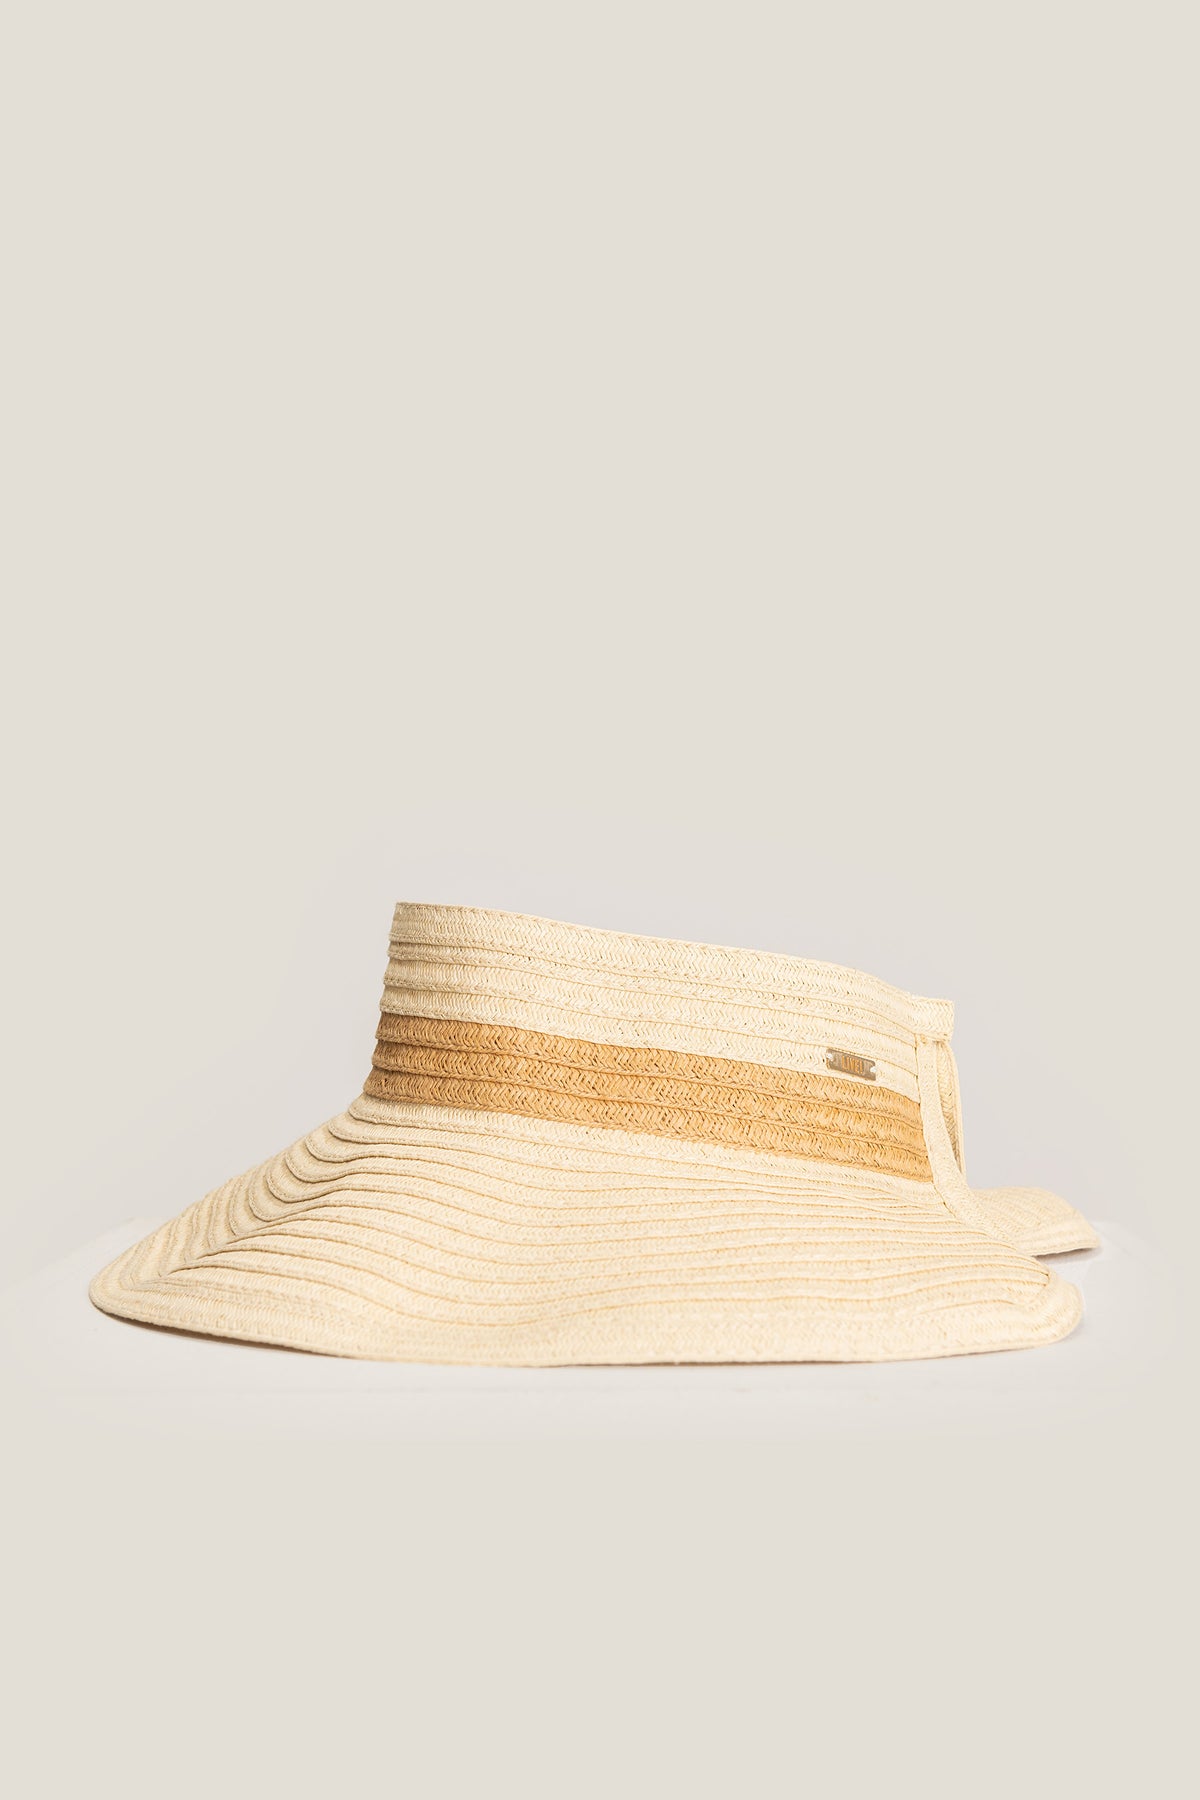 Tropical Straw Roll Hat